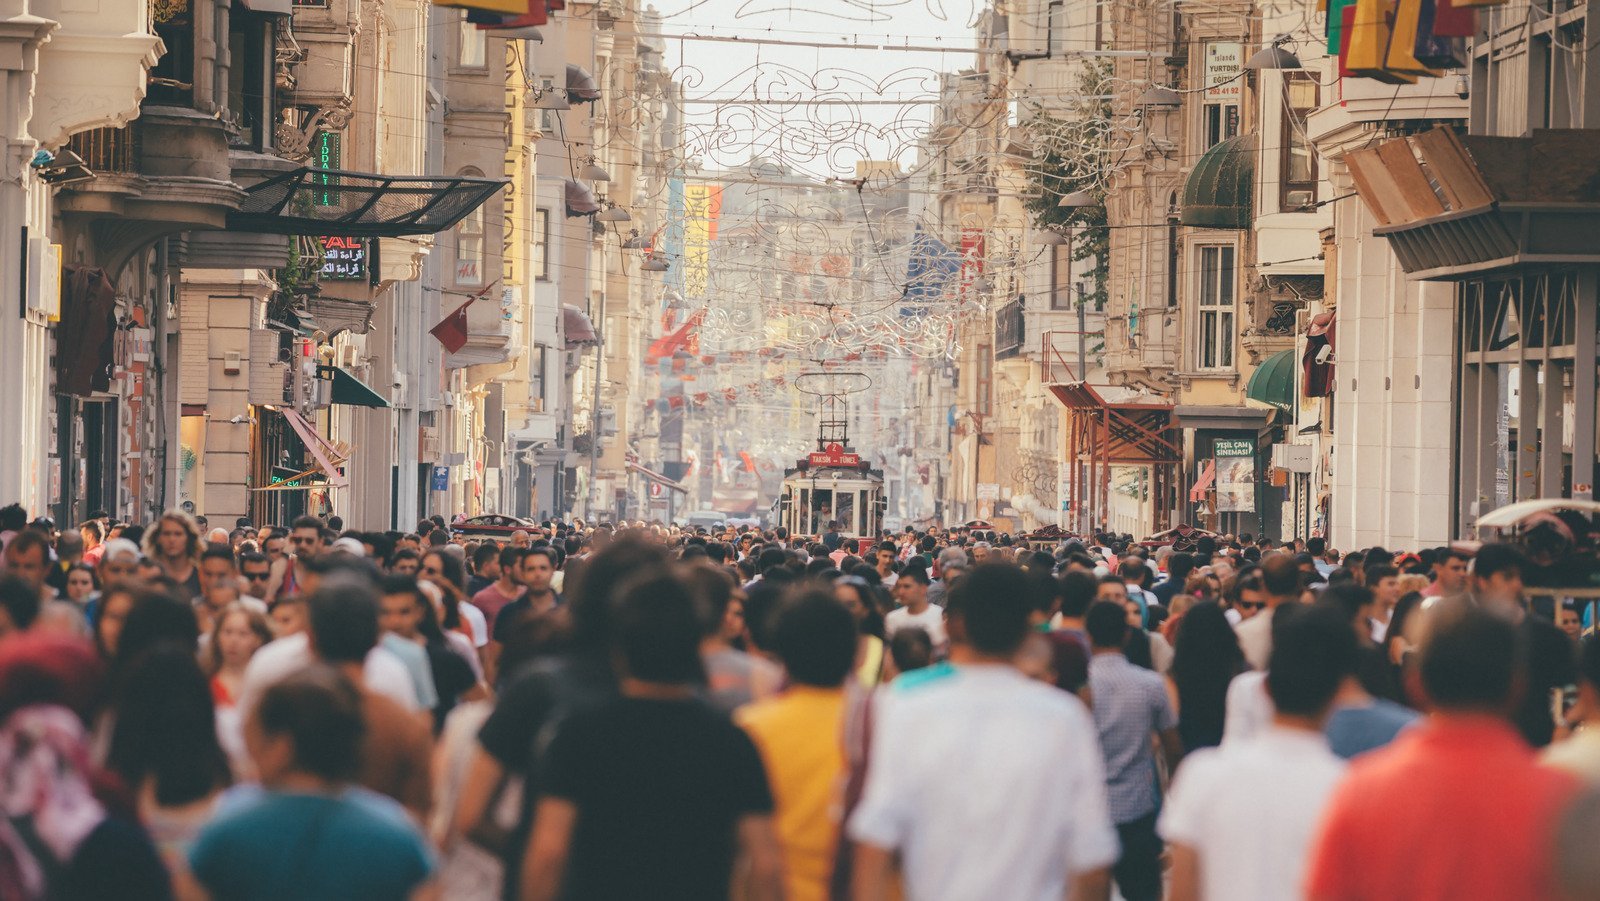 Rick Steves' Top Tips For Avoiding Bustling Crowds When Visiting Europe